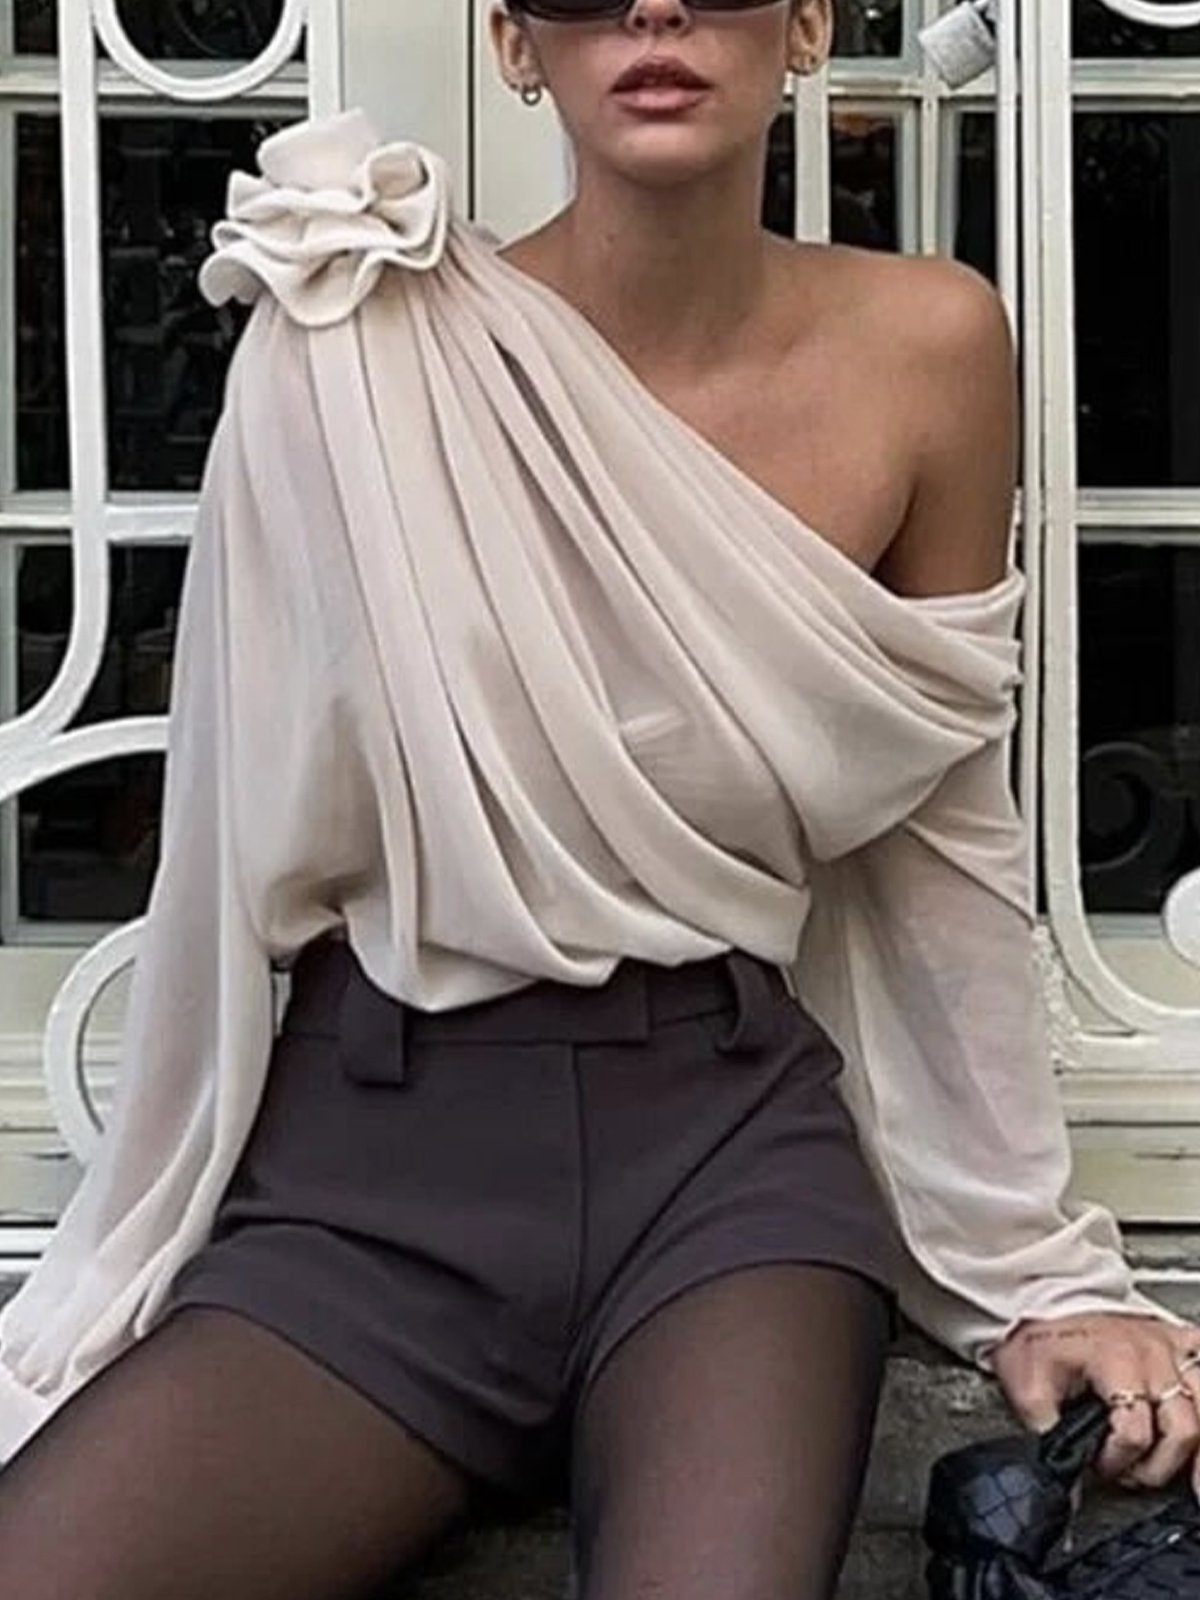 Asymmetrical Loose Plain Elegant Long Sleeve Shirt